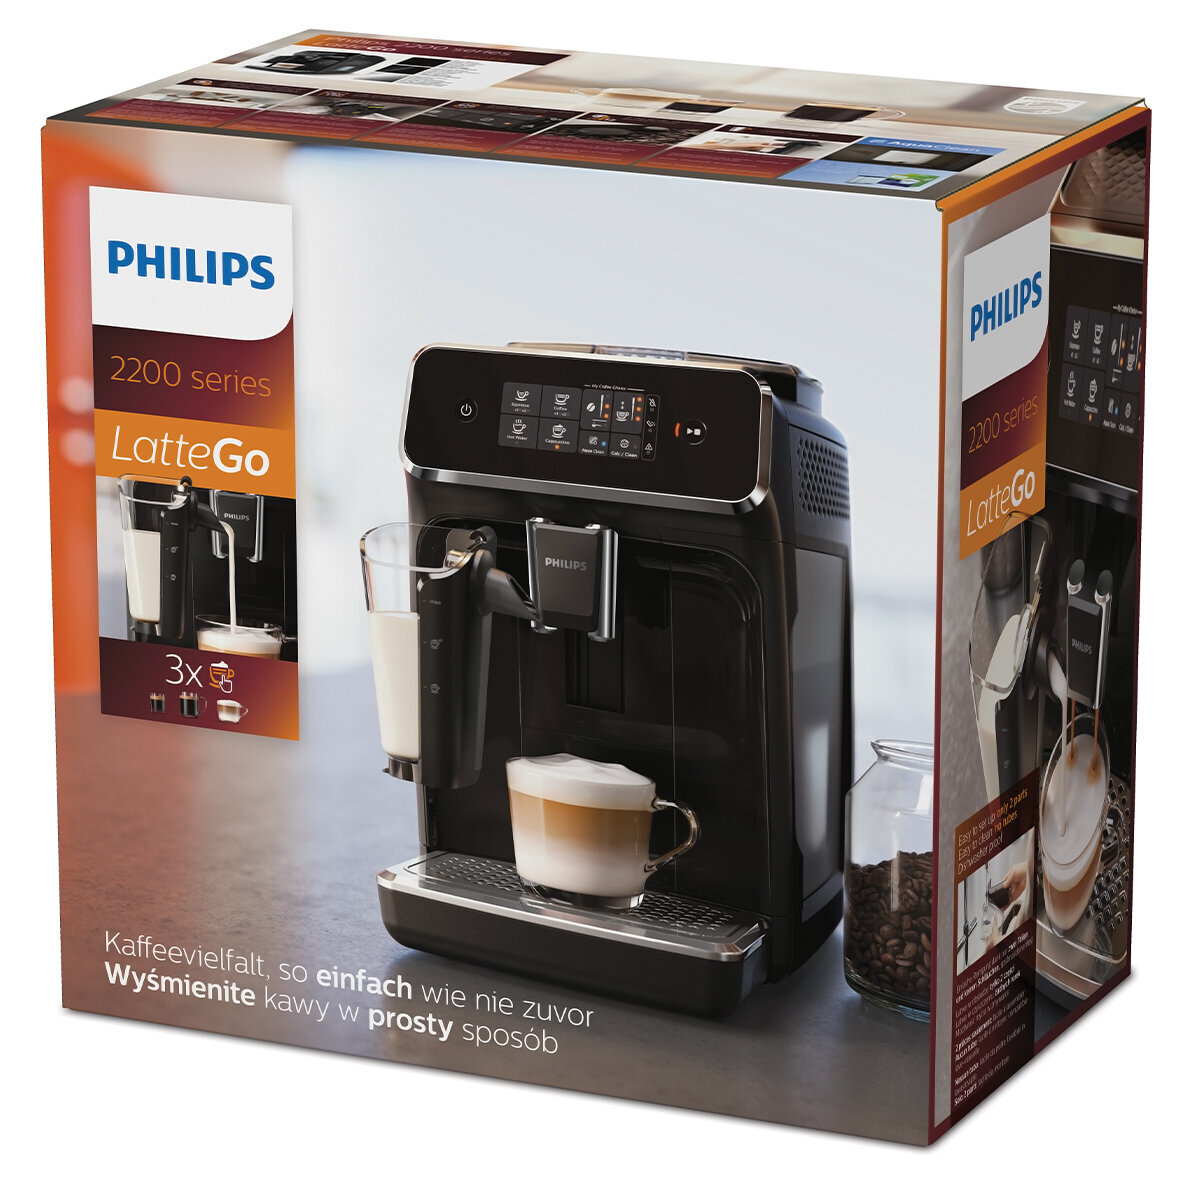 Review by Paul Wojnicki: Philips 5400 LatteGo